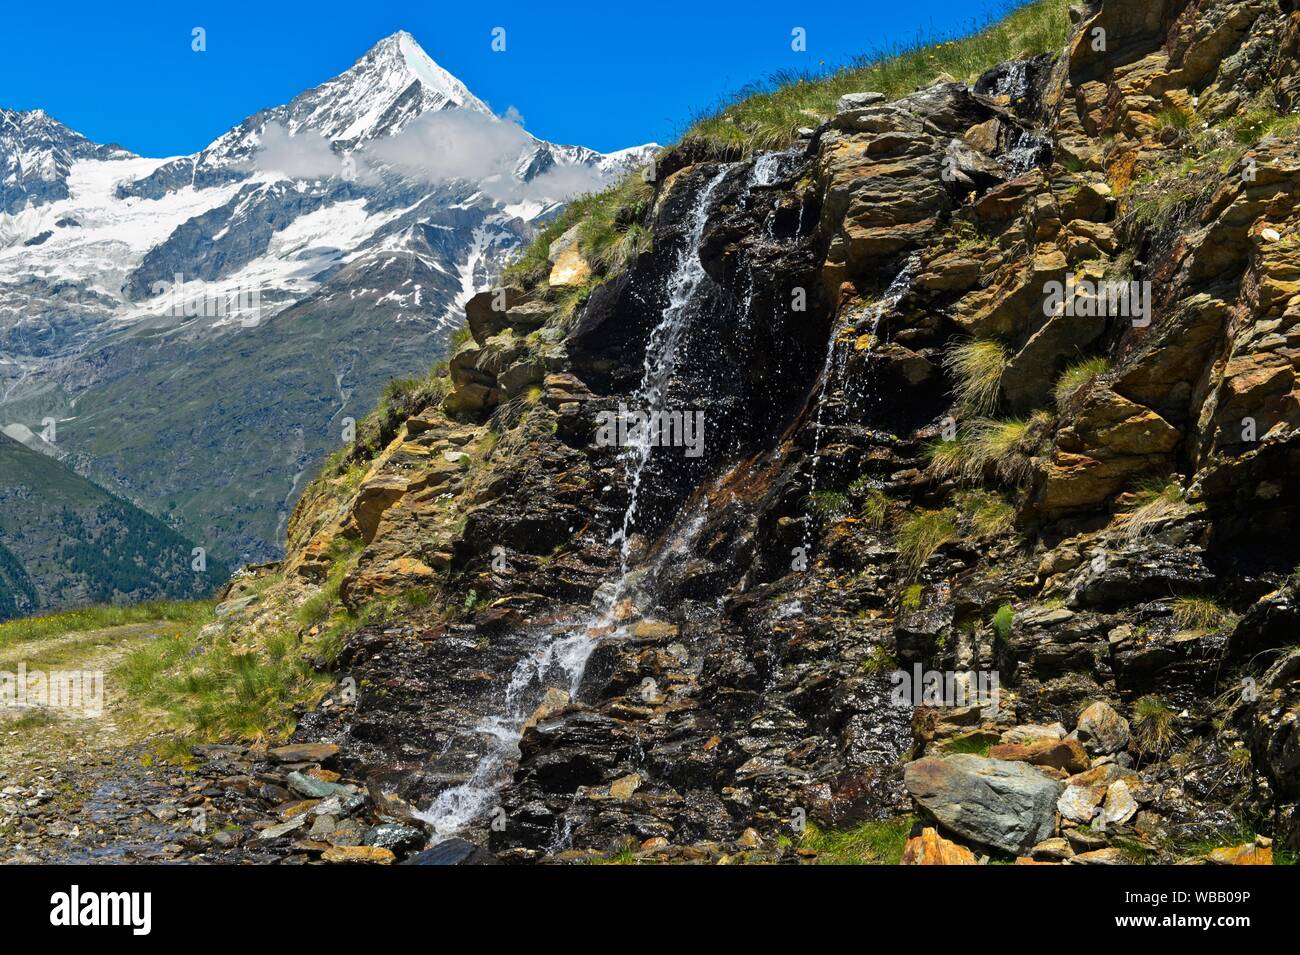 Waterfall in front of the Weisshorn peak, Taeschalp, Valais, Switzerland. Stock Photo